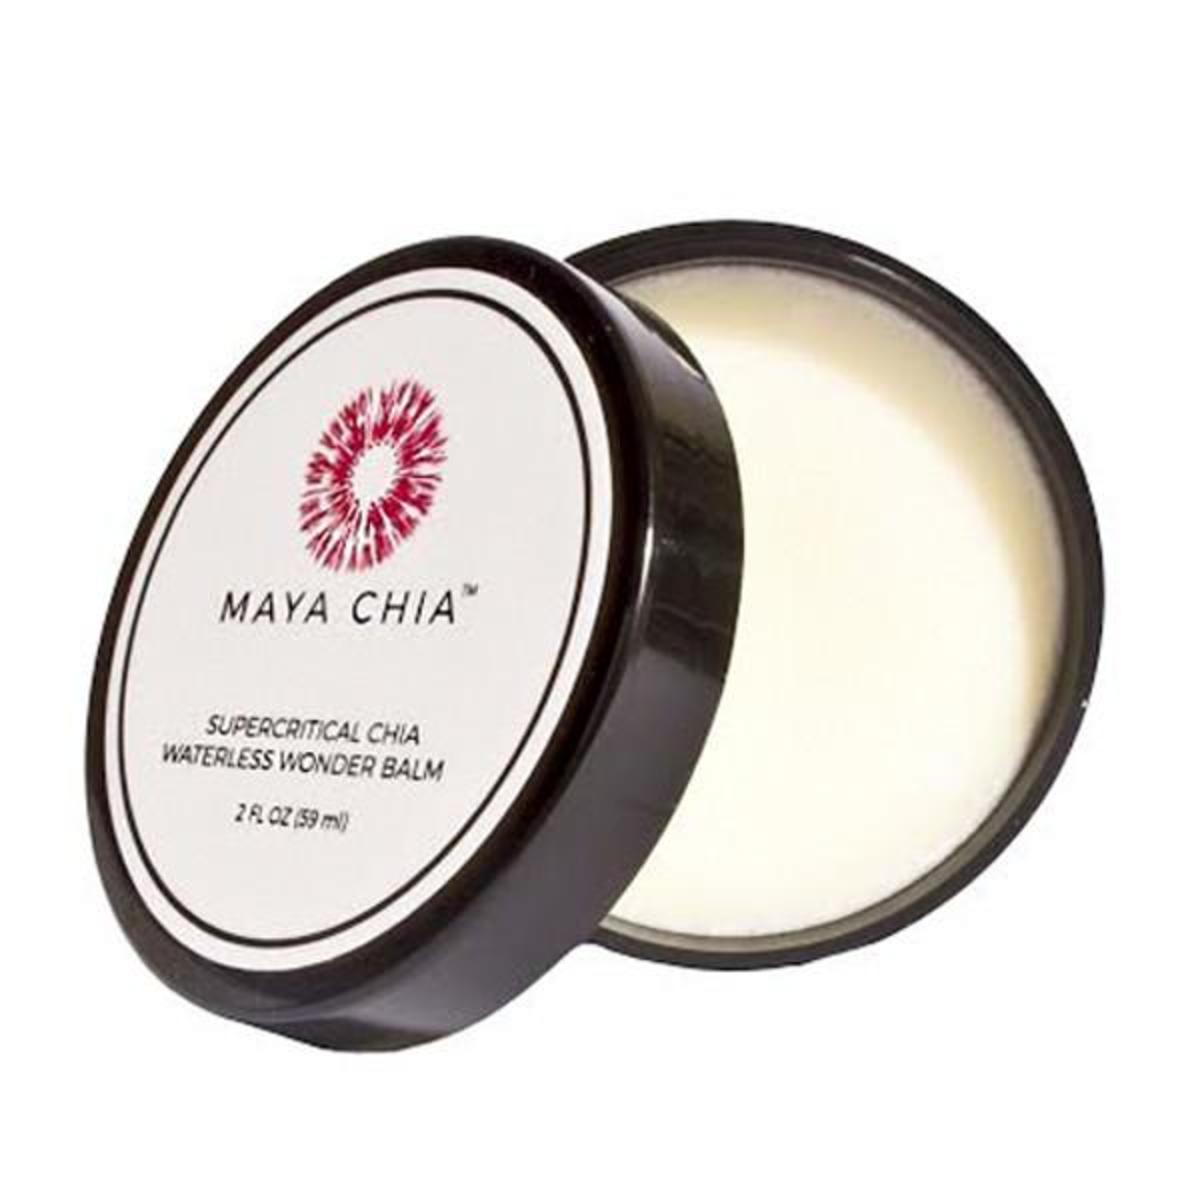 Maya Chia Supercritical Chia Waterless Wonder Balm